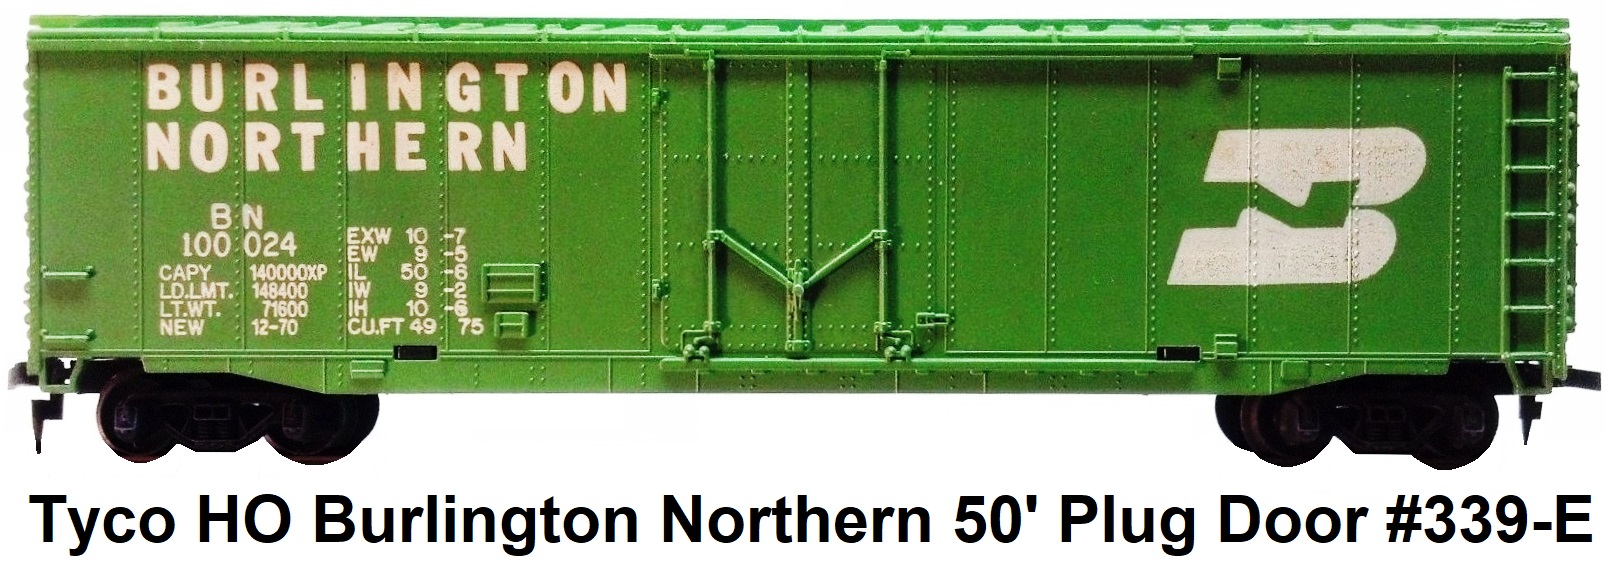 Tyco HO Burlington Northern 50' plug door box car #339-E